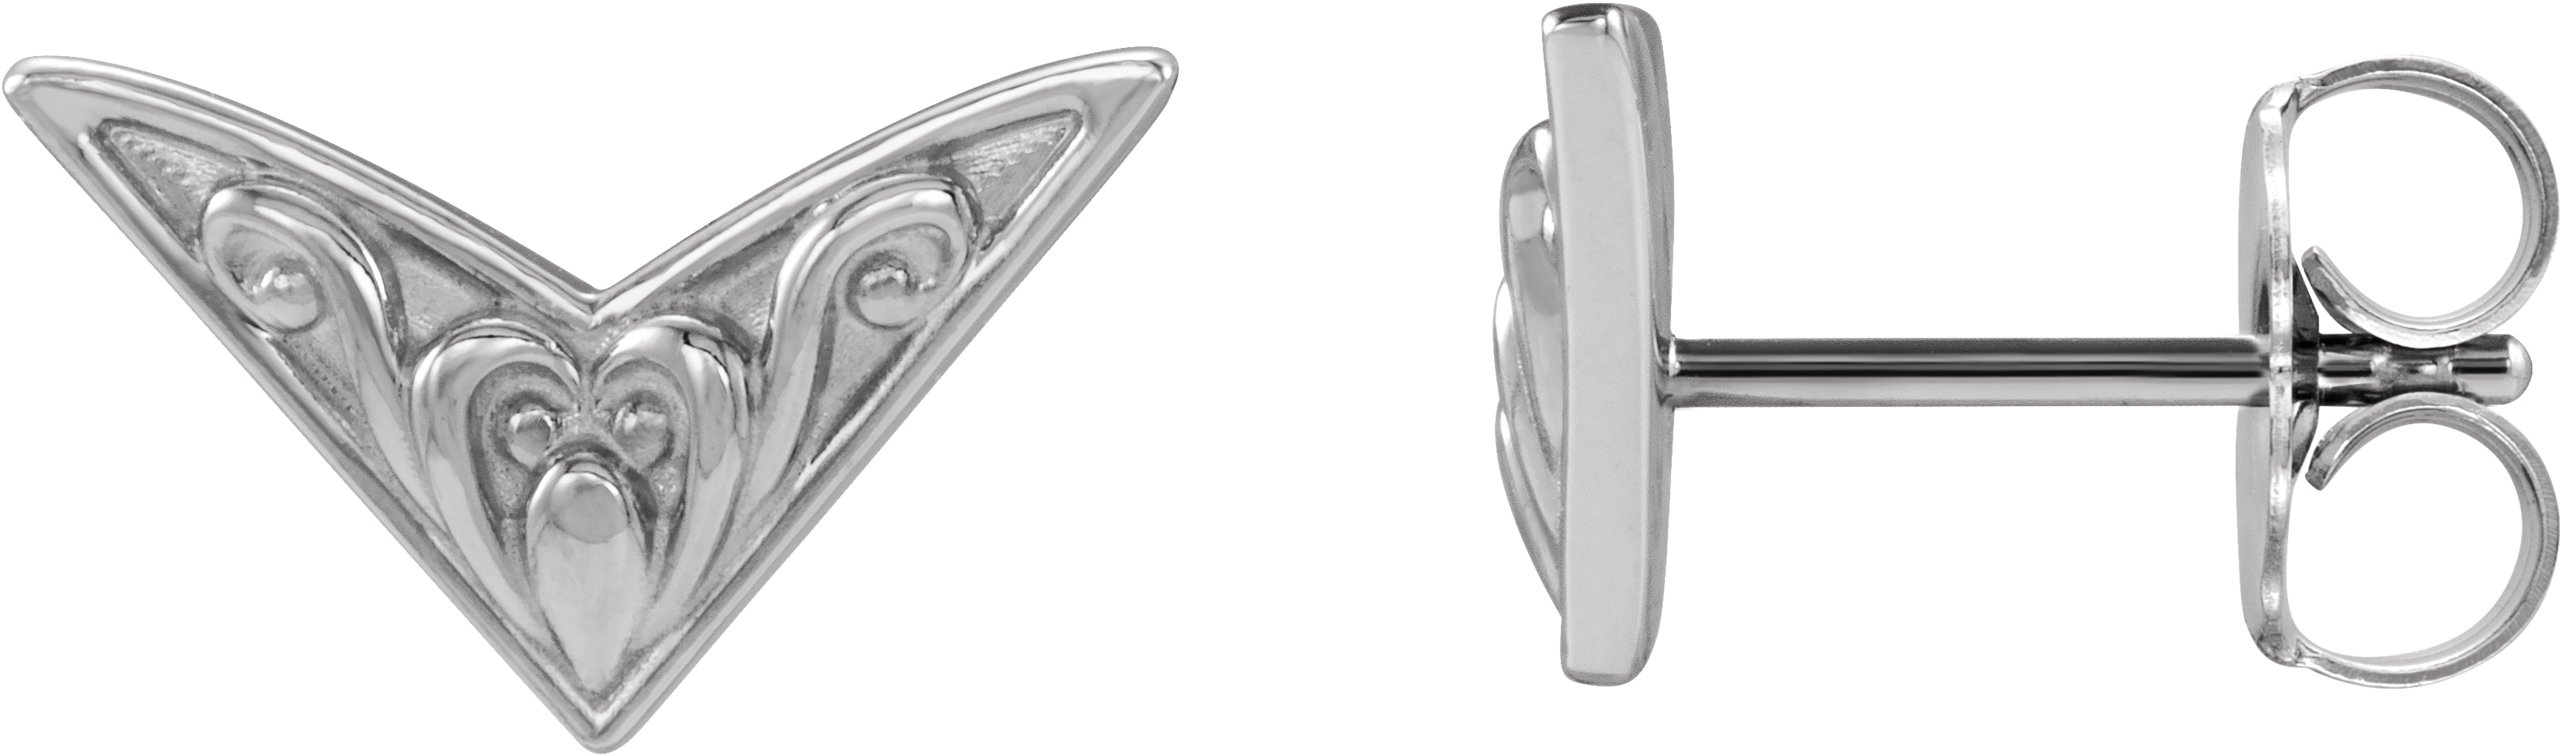 Sterling Silver Sculptural-Inspired Earrings